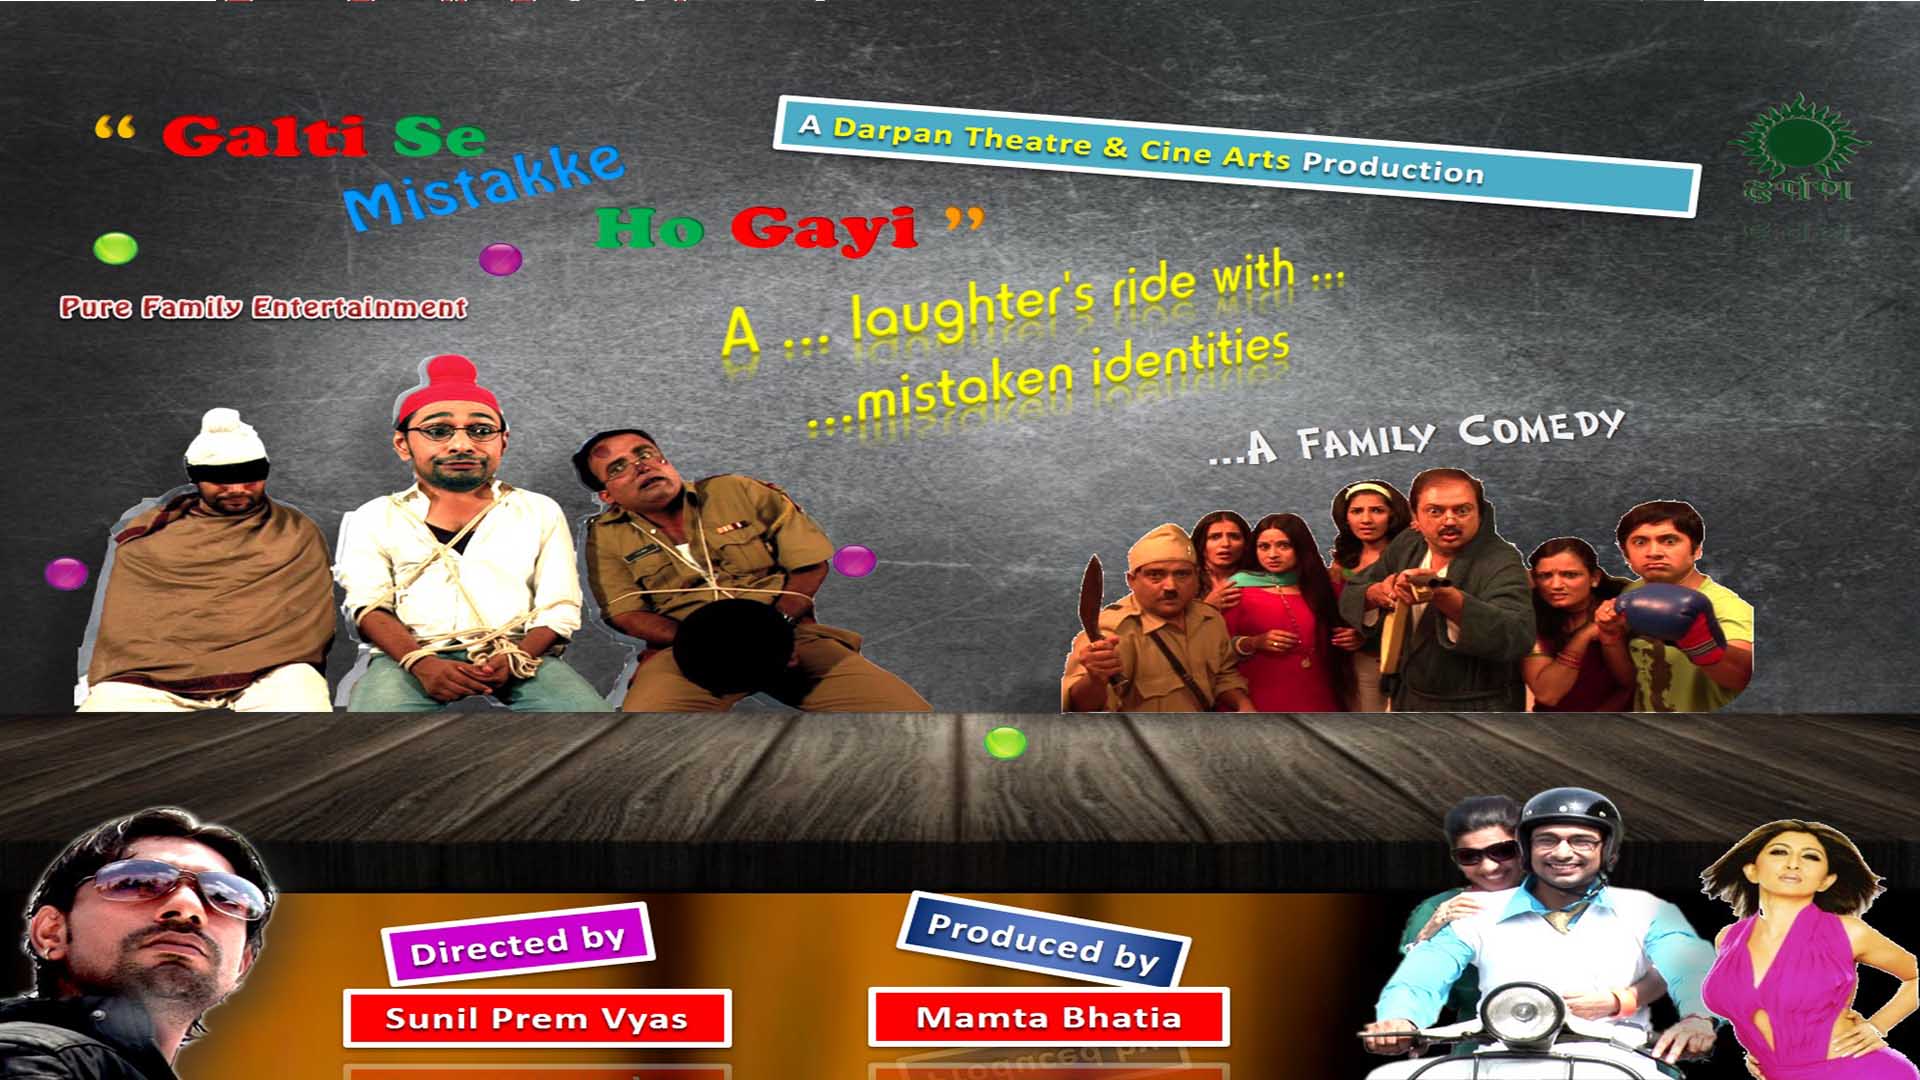 29-sunil prem vyas darpan theatre & cinema arts movies films drama acting workshop classes play stage mumbai